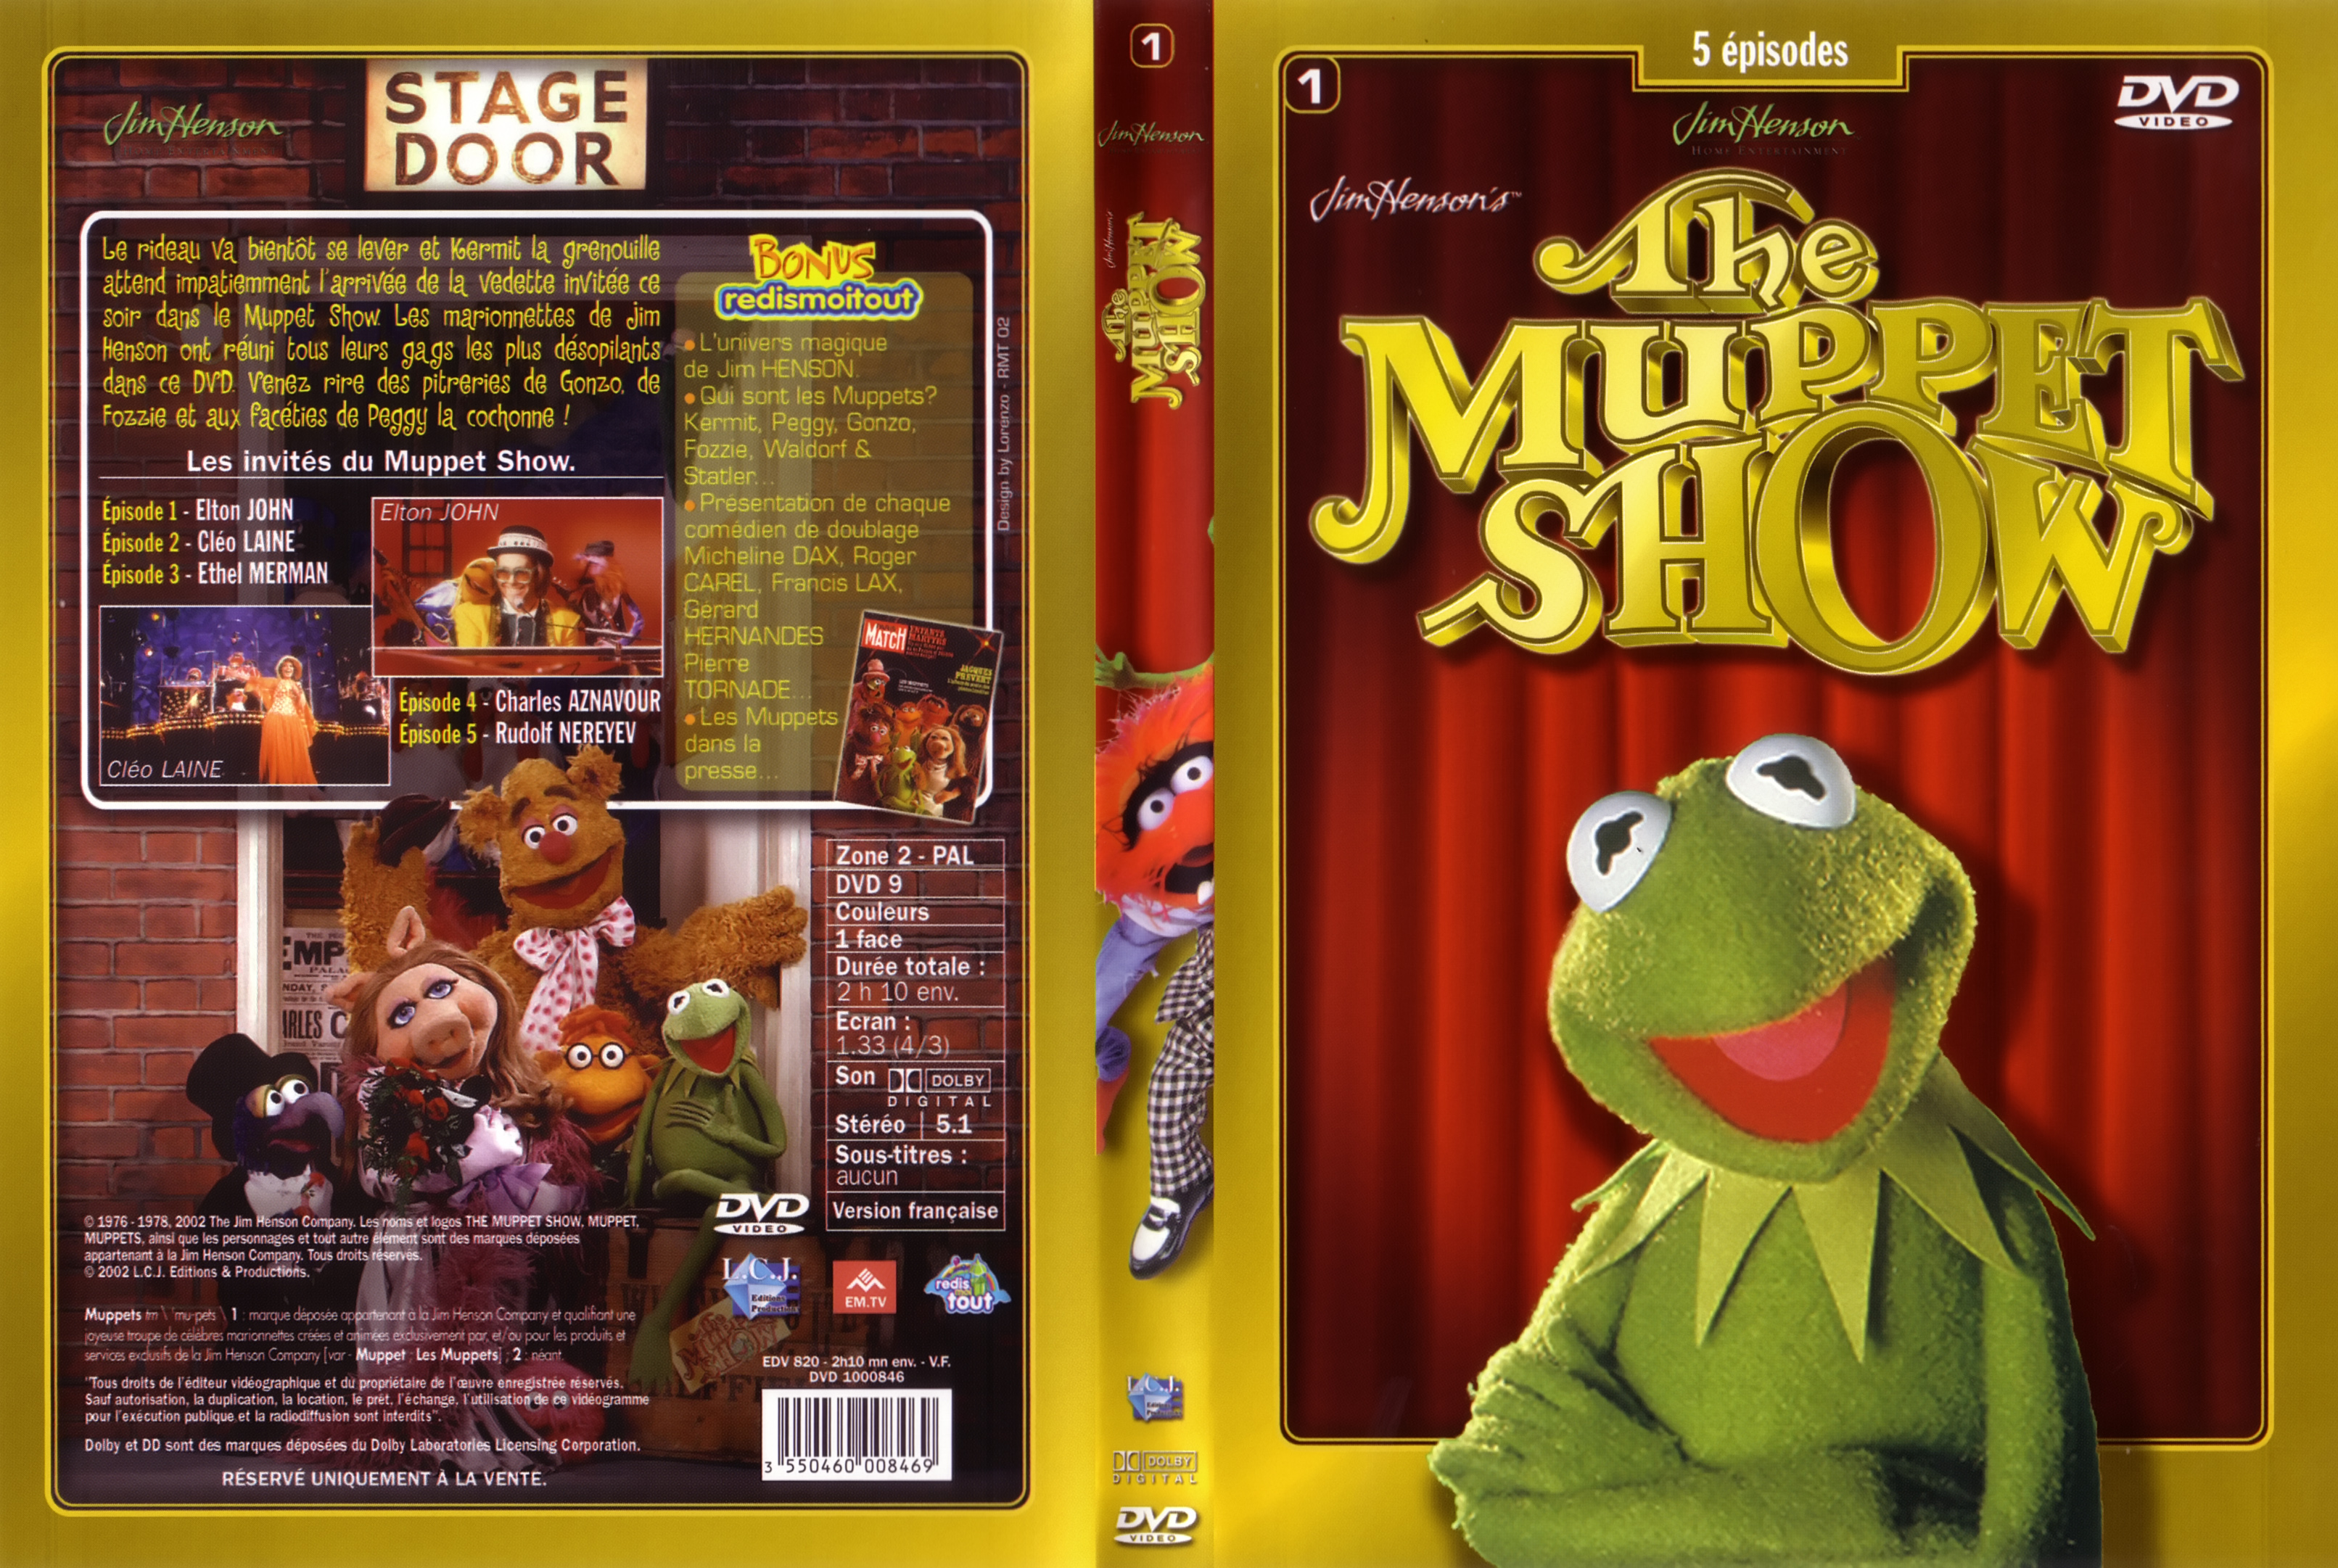 Jaquette DVD The muppet show vol 1 DVD 1